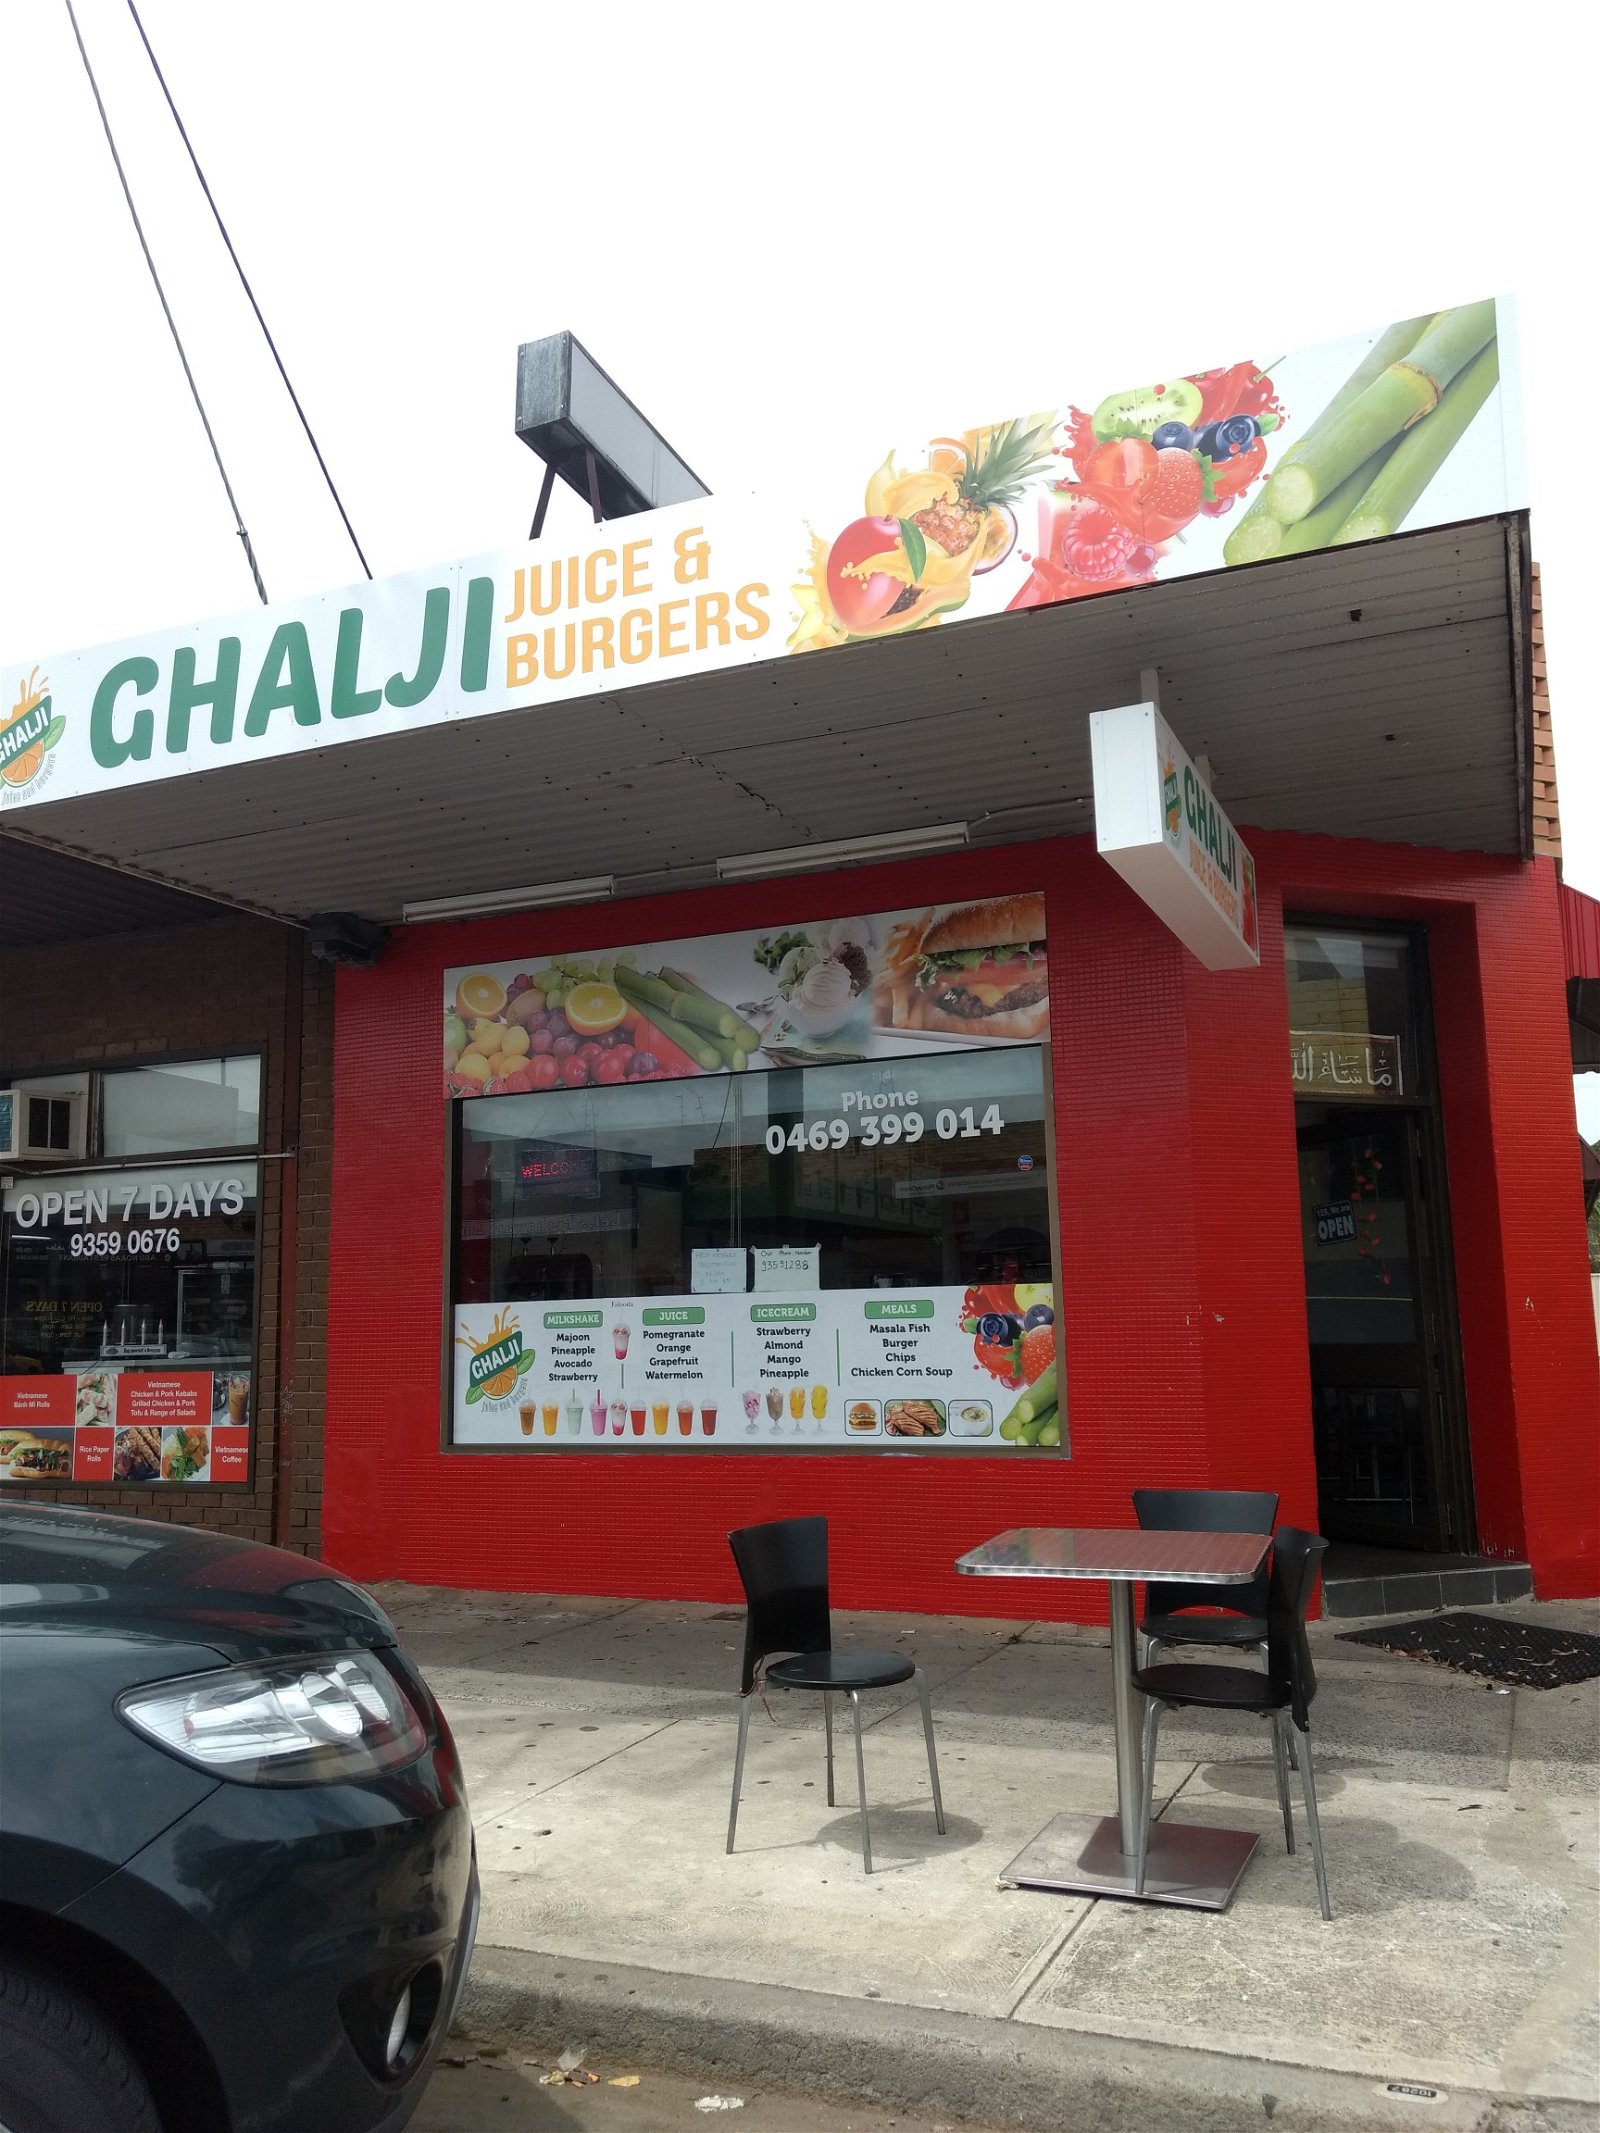 Ghalji Juice  Burgers - Great Ocean Road Tourism